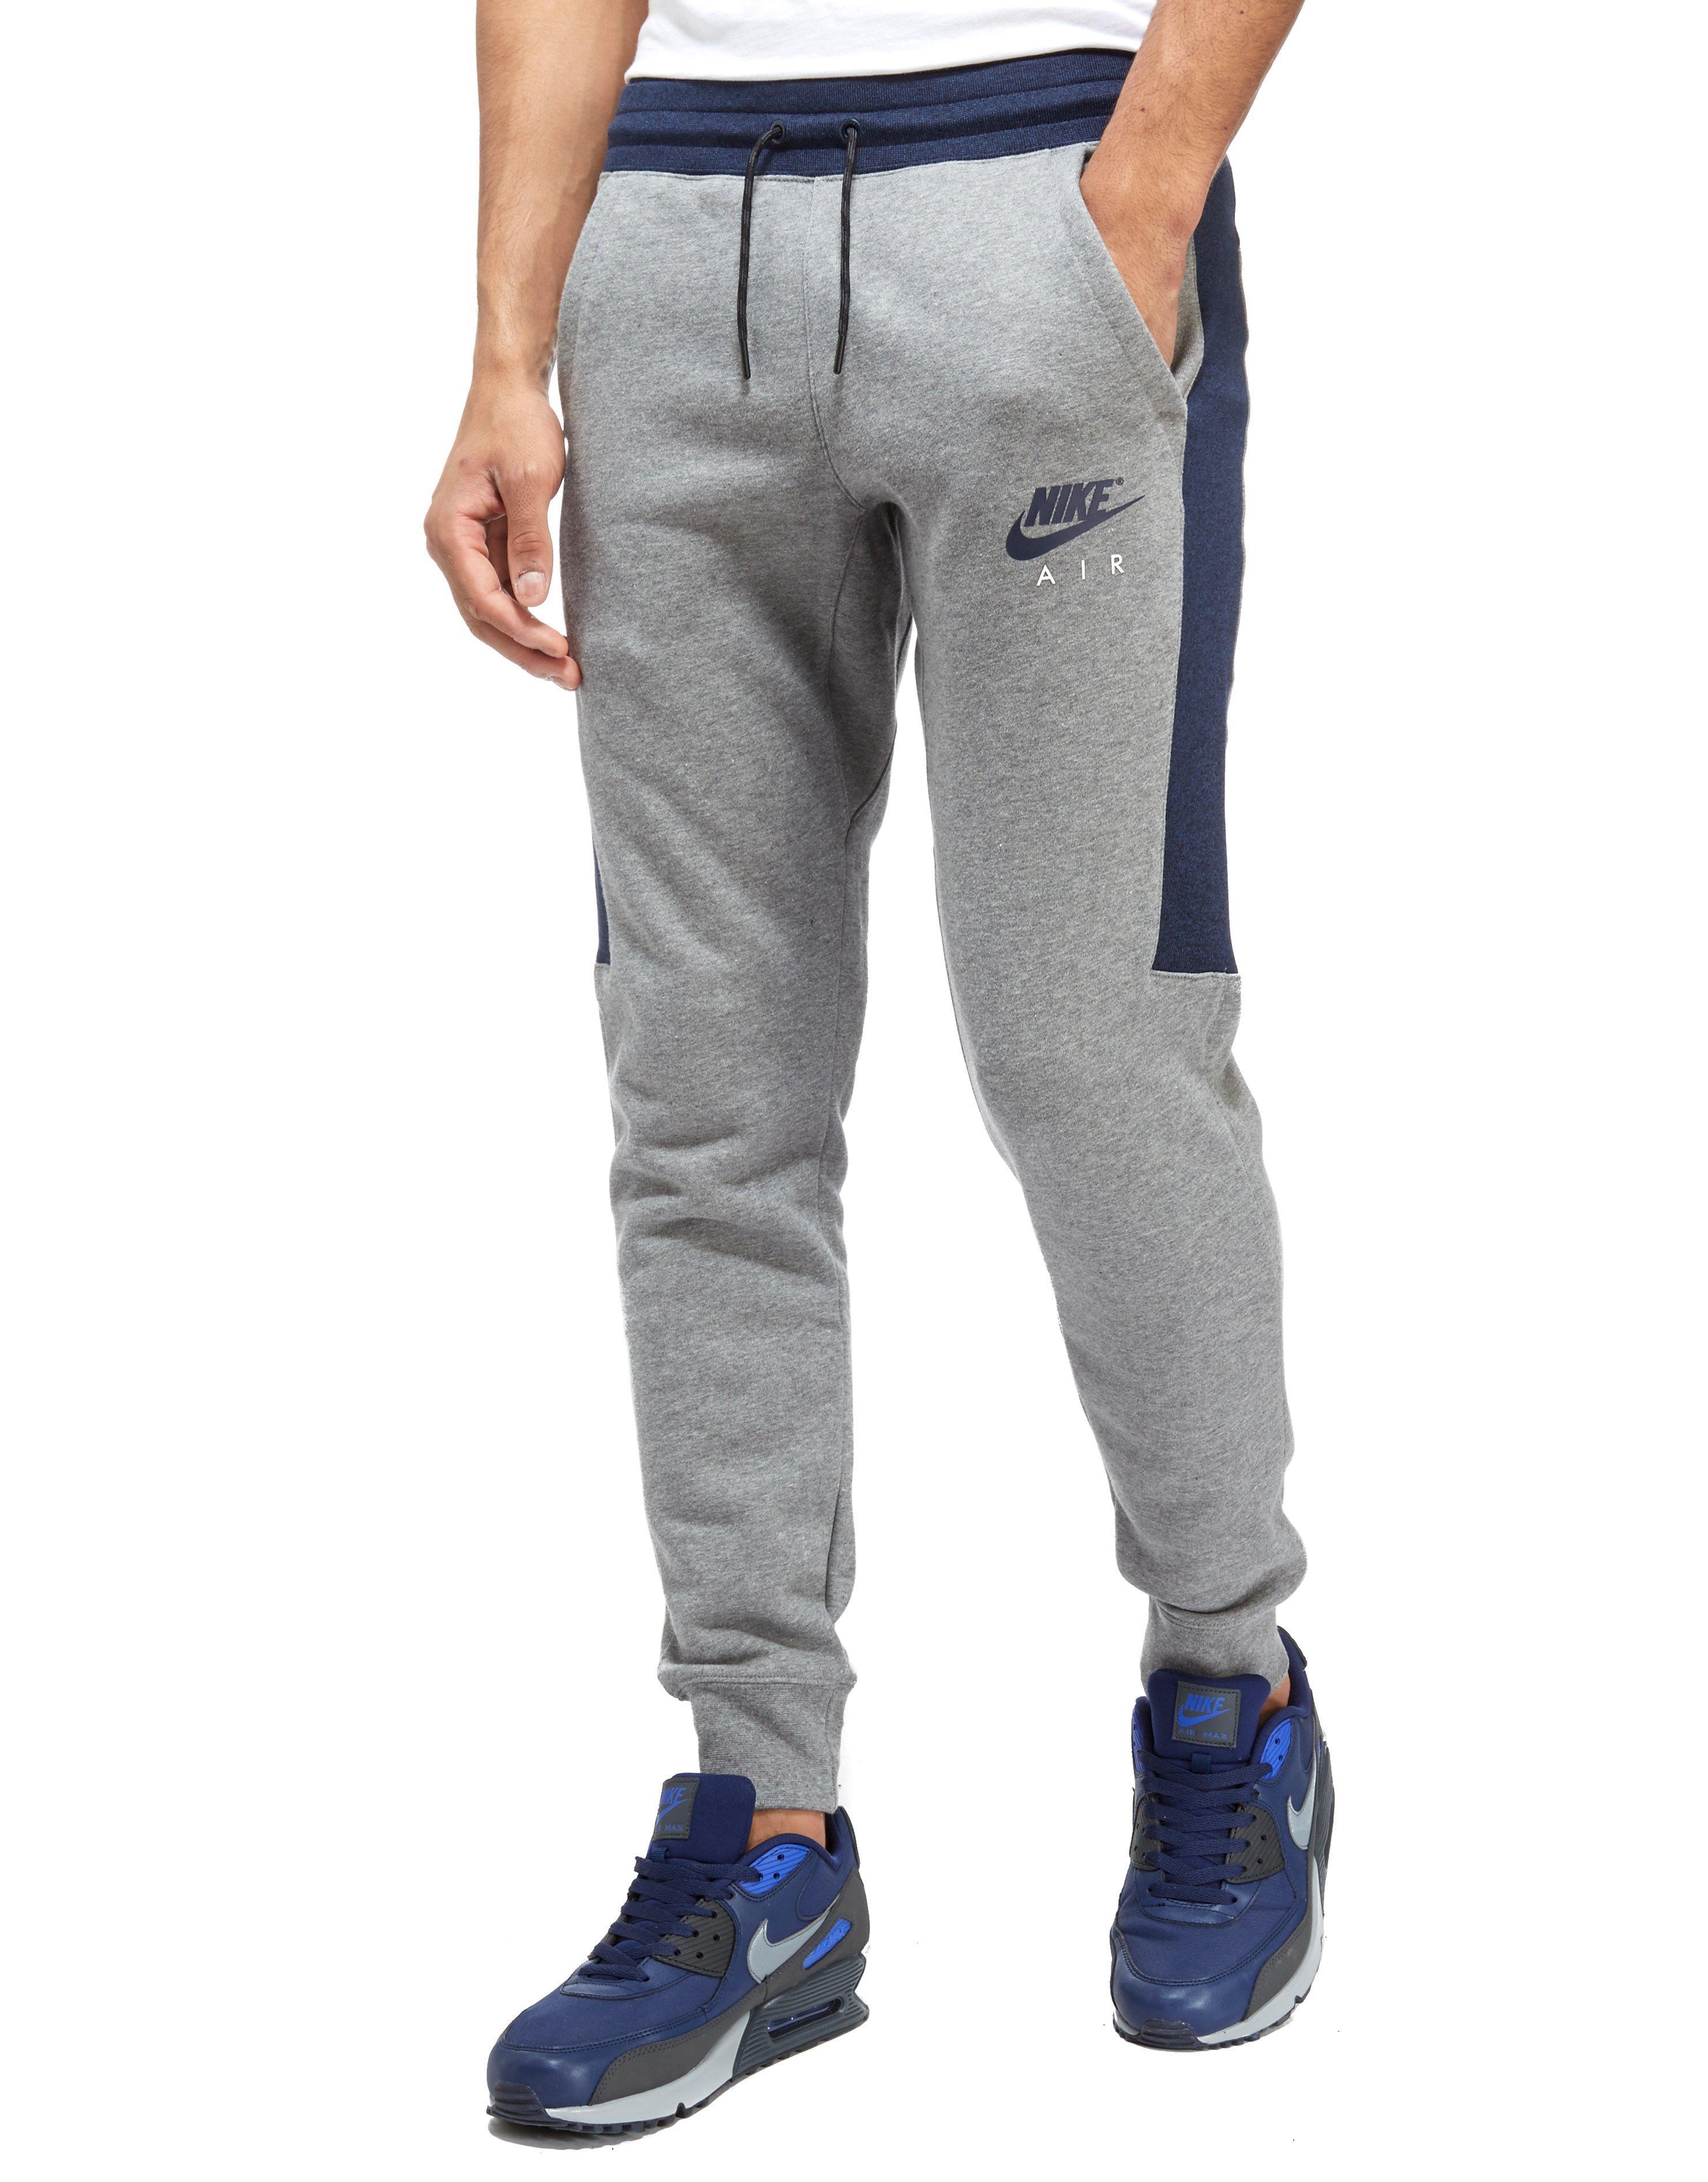 Nike Air Deep Cuff Fleece Pants in Dark Grey (Gray) for Men - Lyst